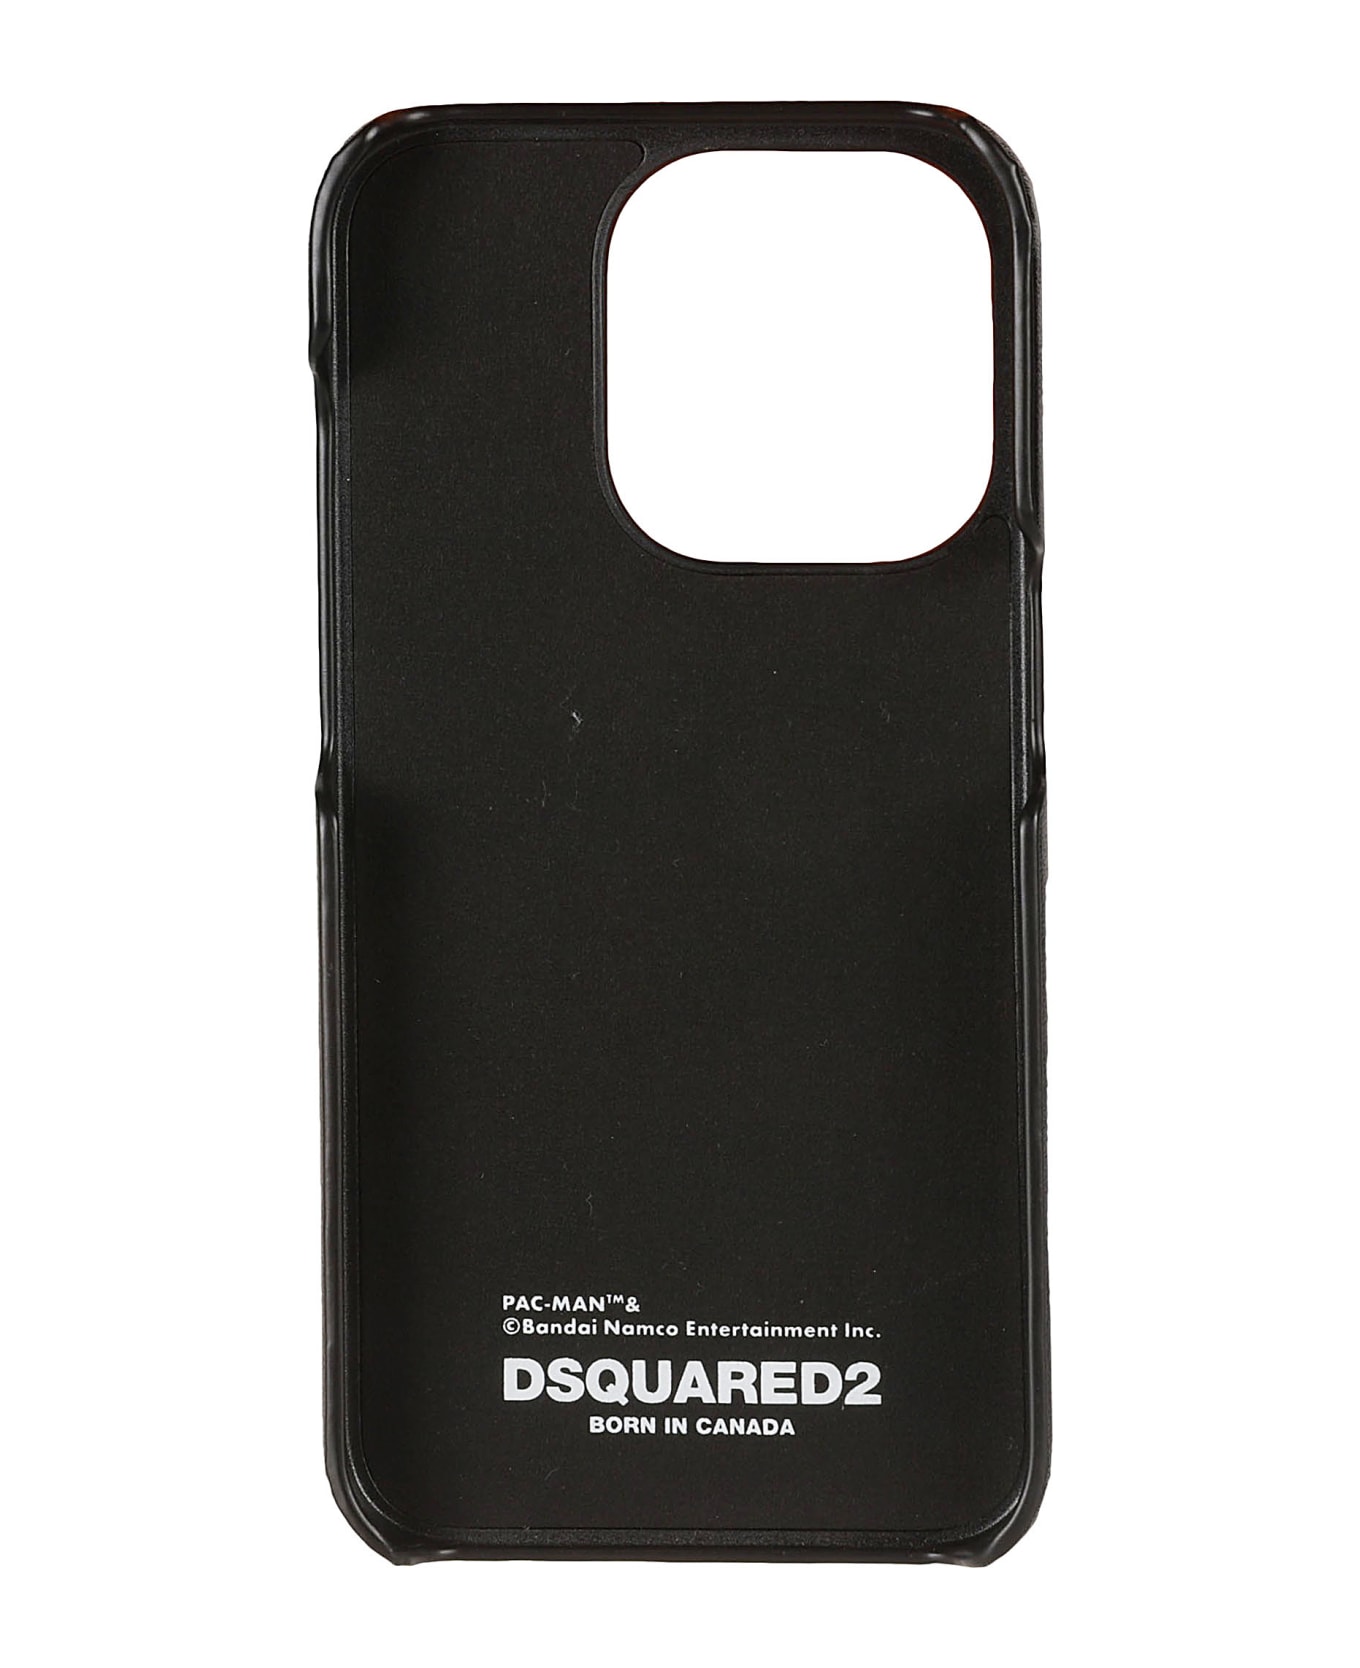 Dsquared2 Pac-man Iphone Cover - Nero デジタルアクセサリー